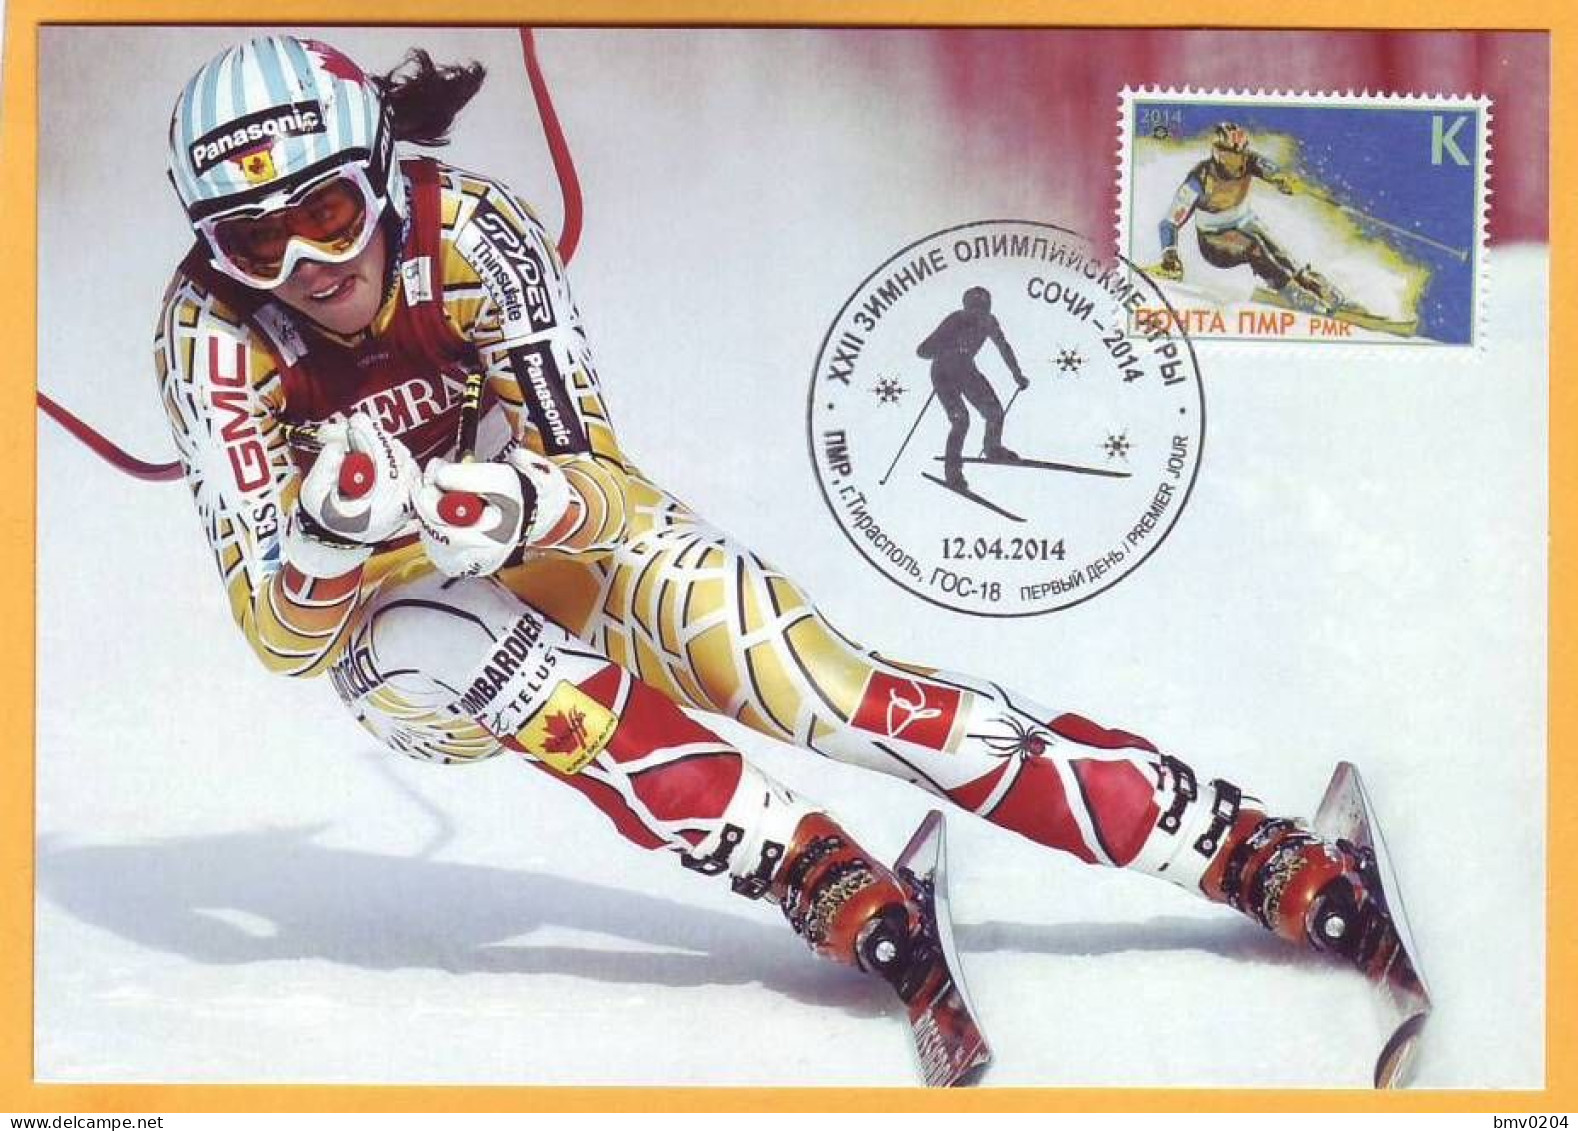 2014  Moldova Moldavie Moldau.Maxicard Transnistria.  Winter Olympic Games In Sochi. Downhill Skiing.Tiraspol. - Winter 2014: Sotschi